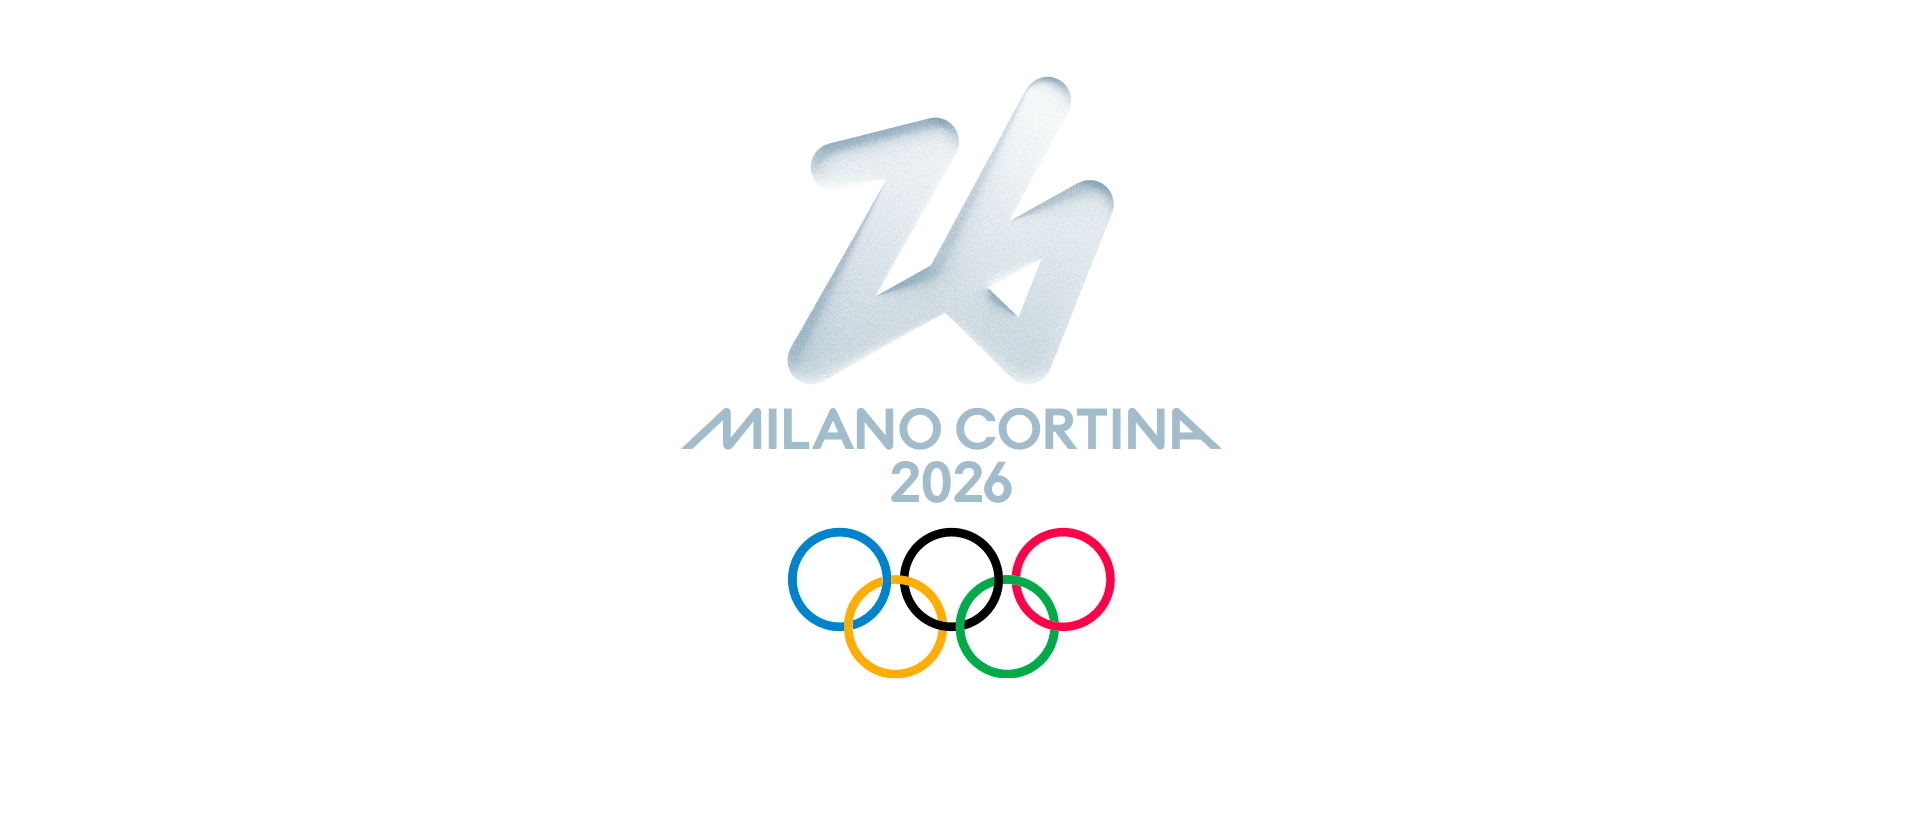 Milano Cortina 2026 | Olympic Winter games